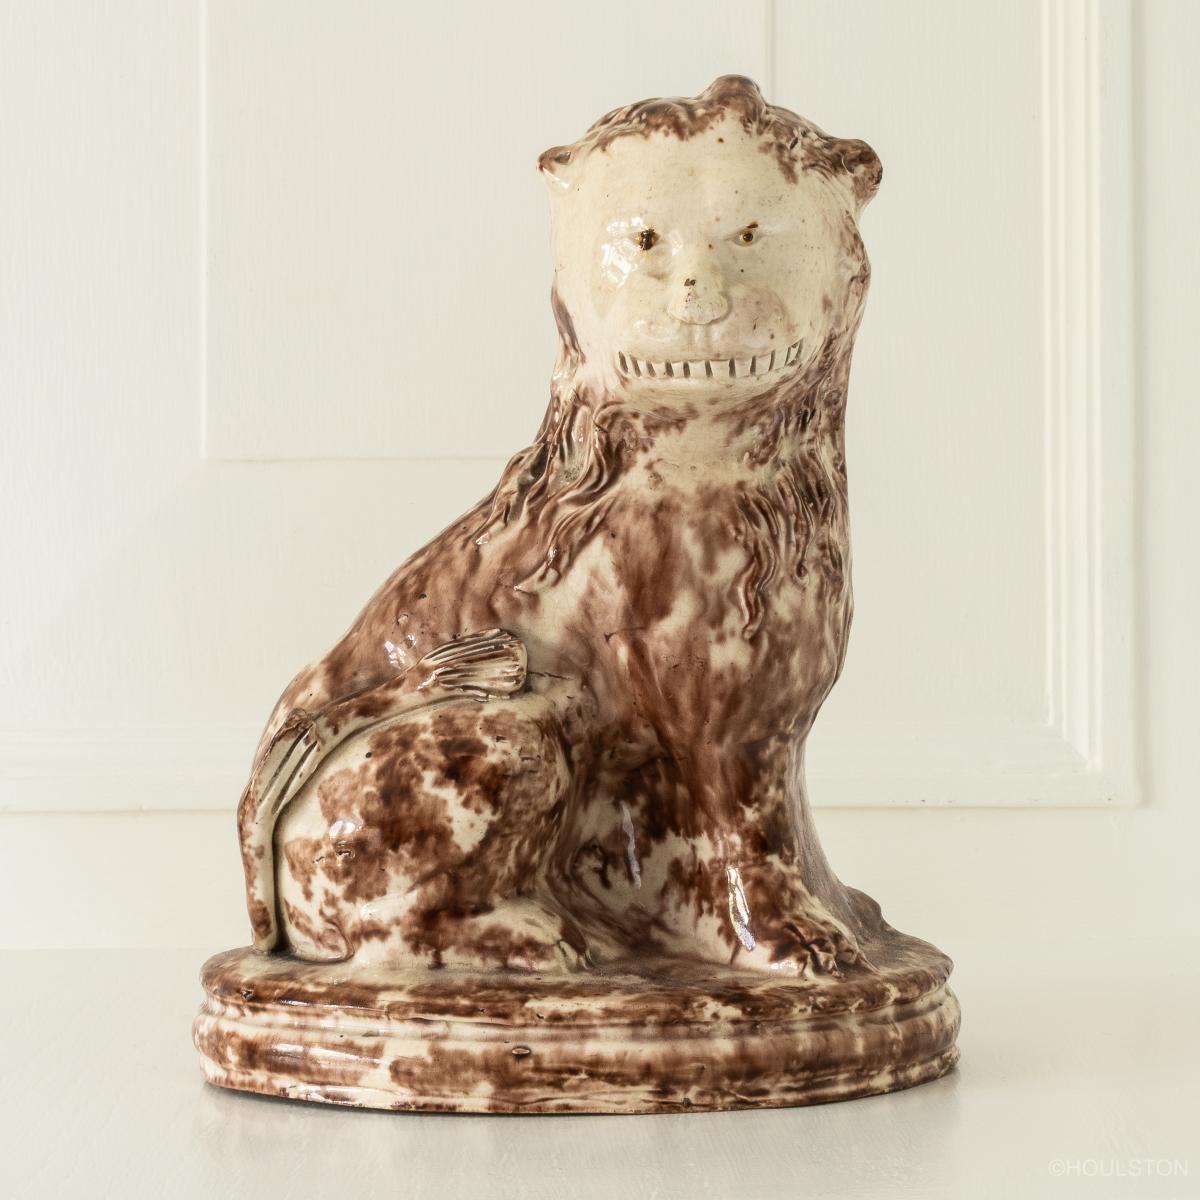 An 18th century creamware figure of a lion